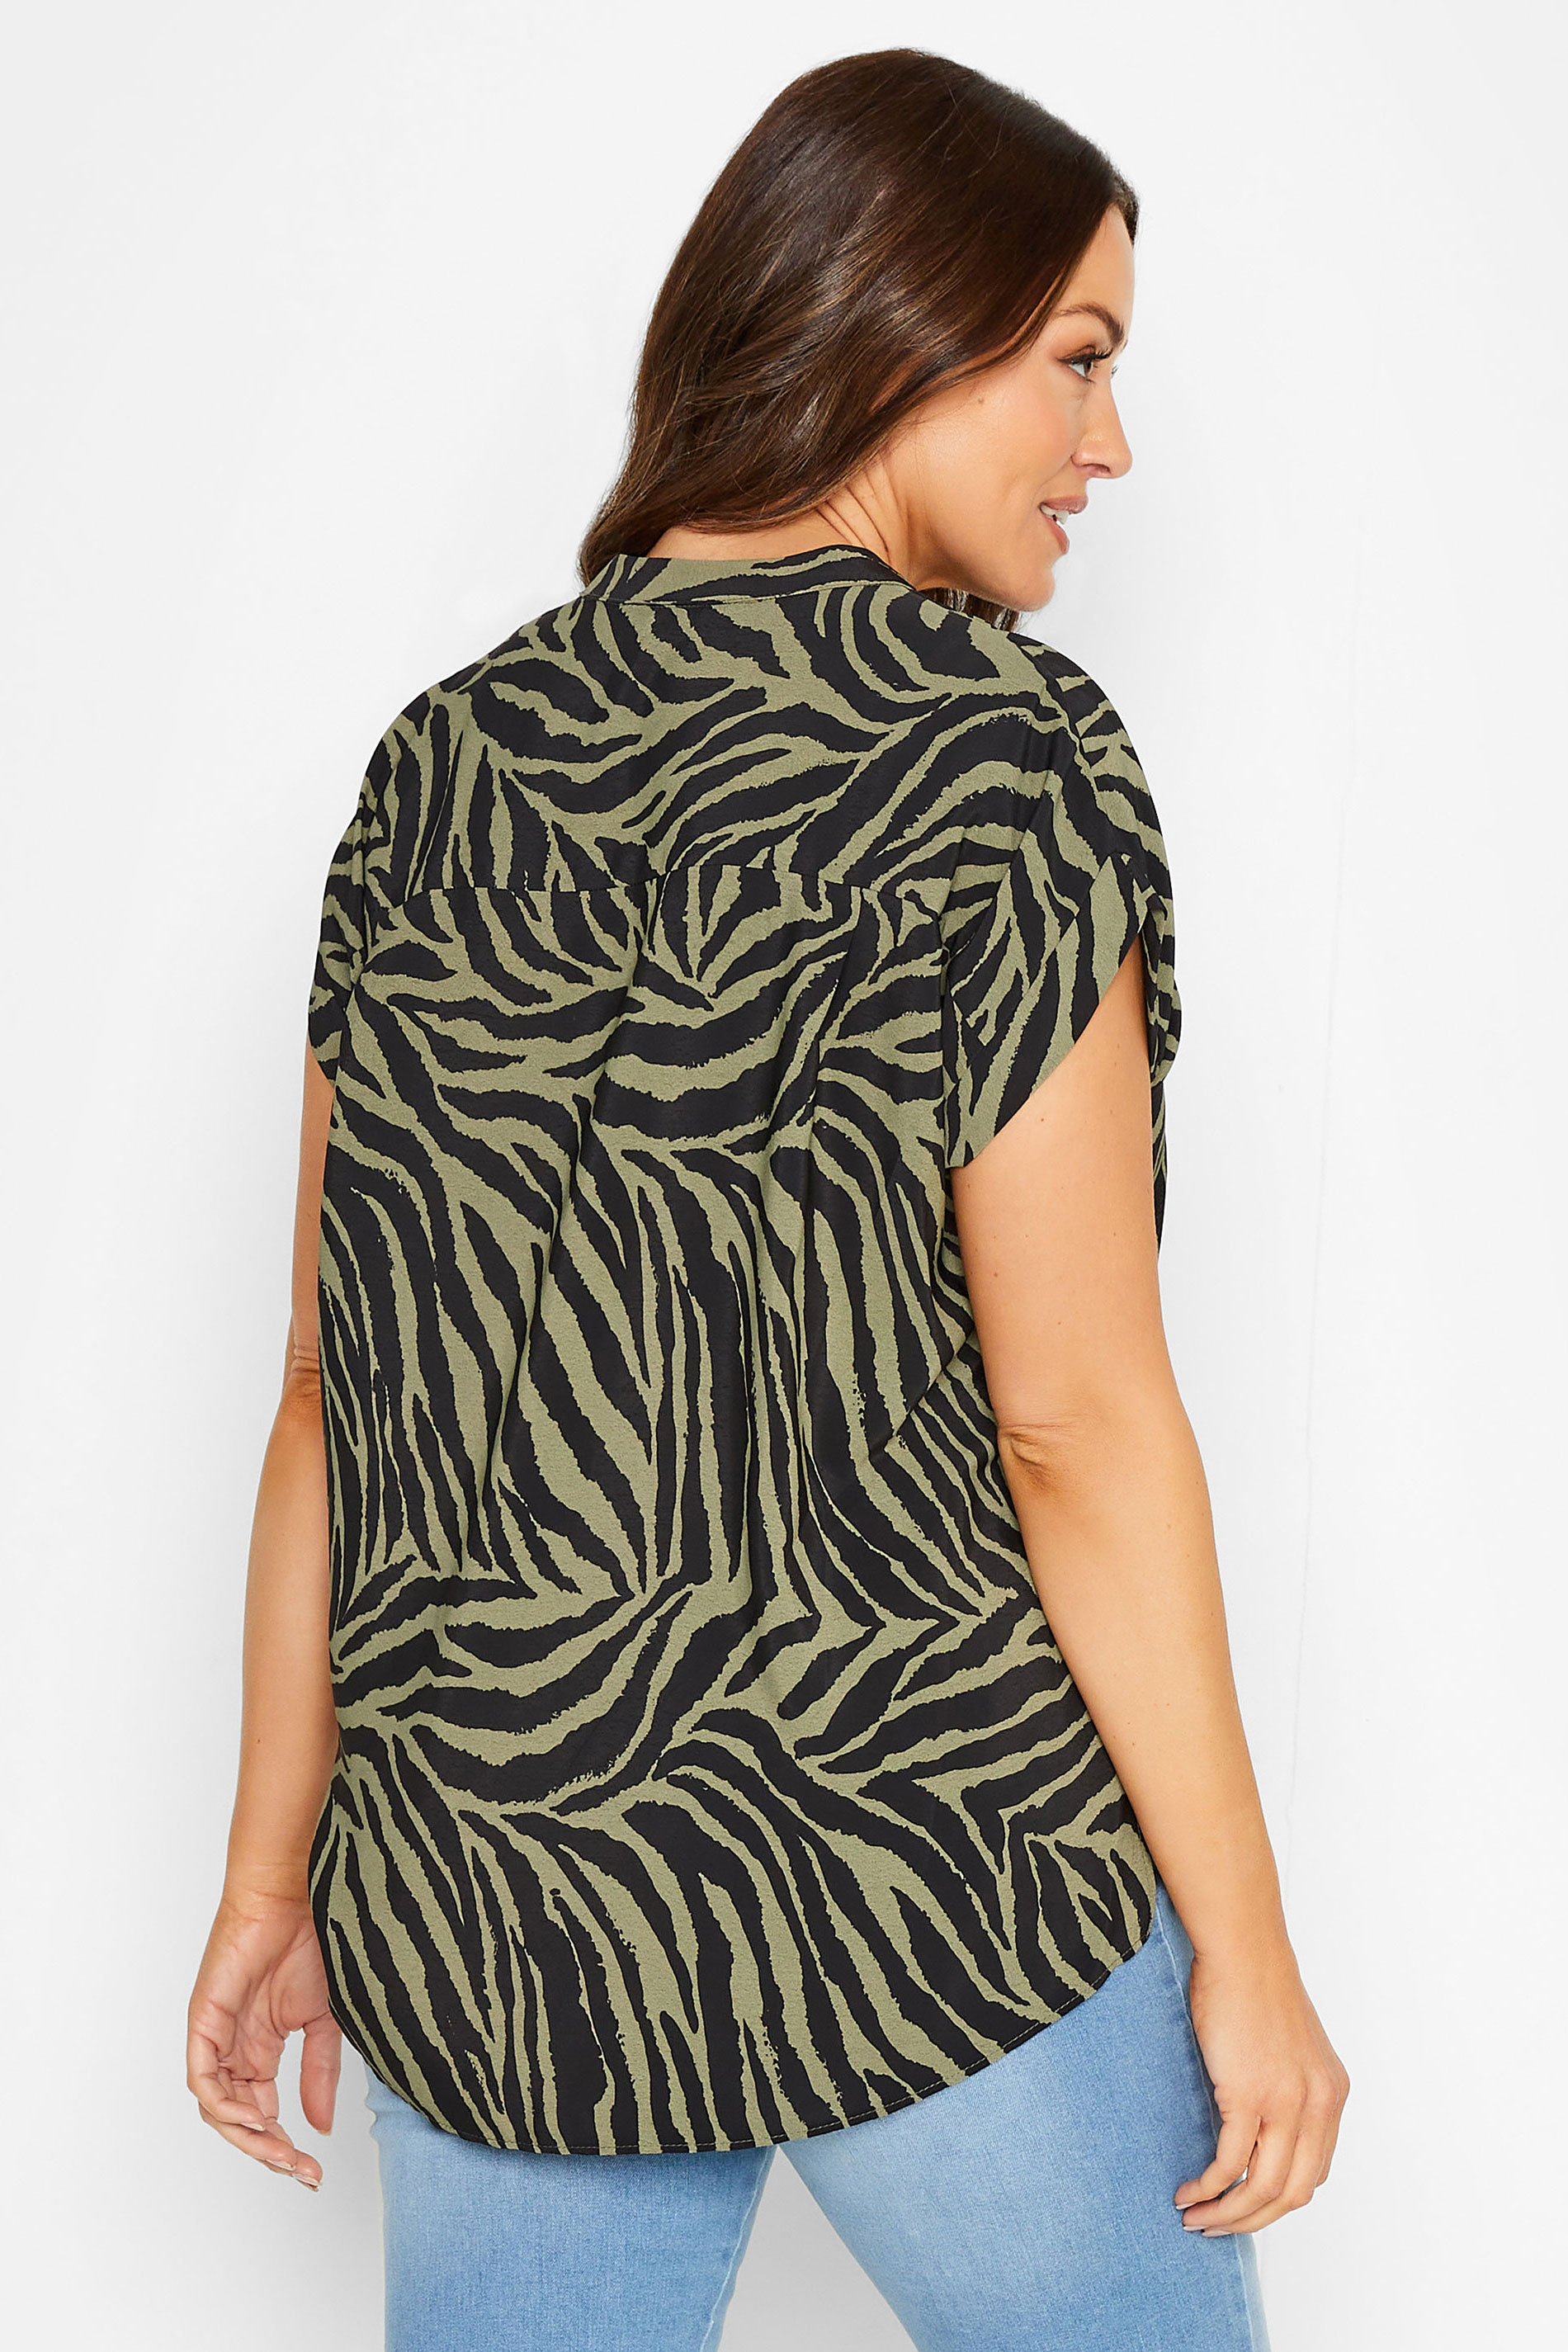 M&Co Khaki Green Zebra Print Shirt | M&Co  3